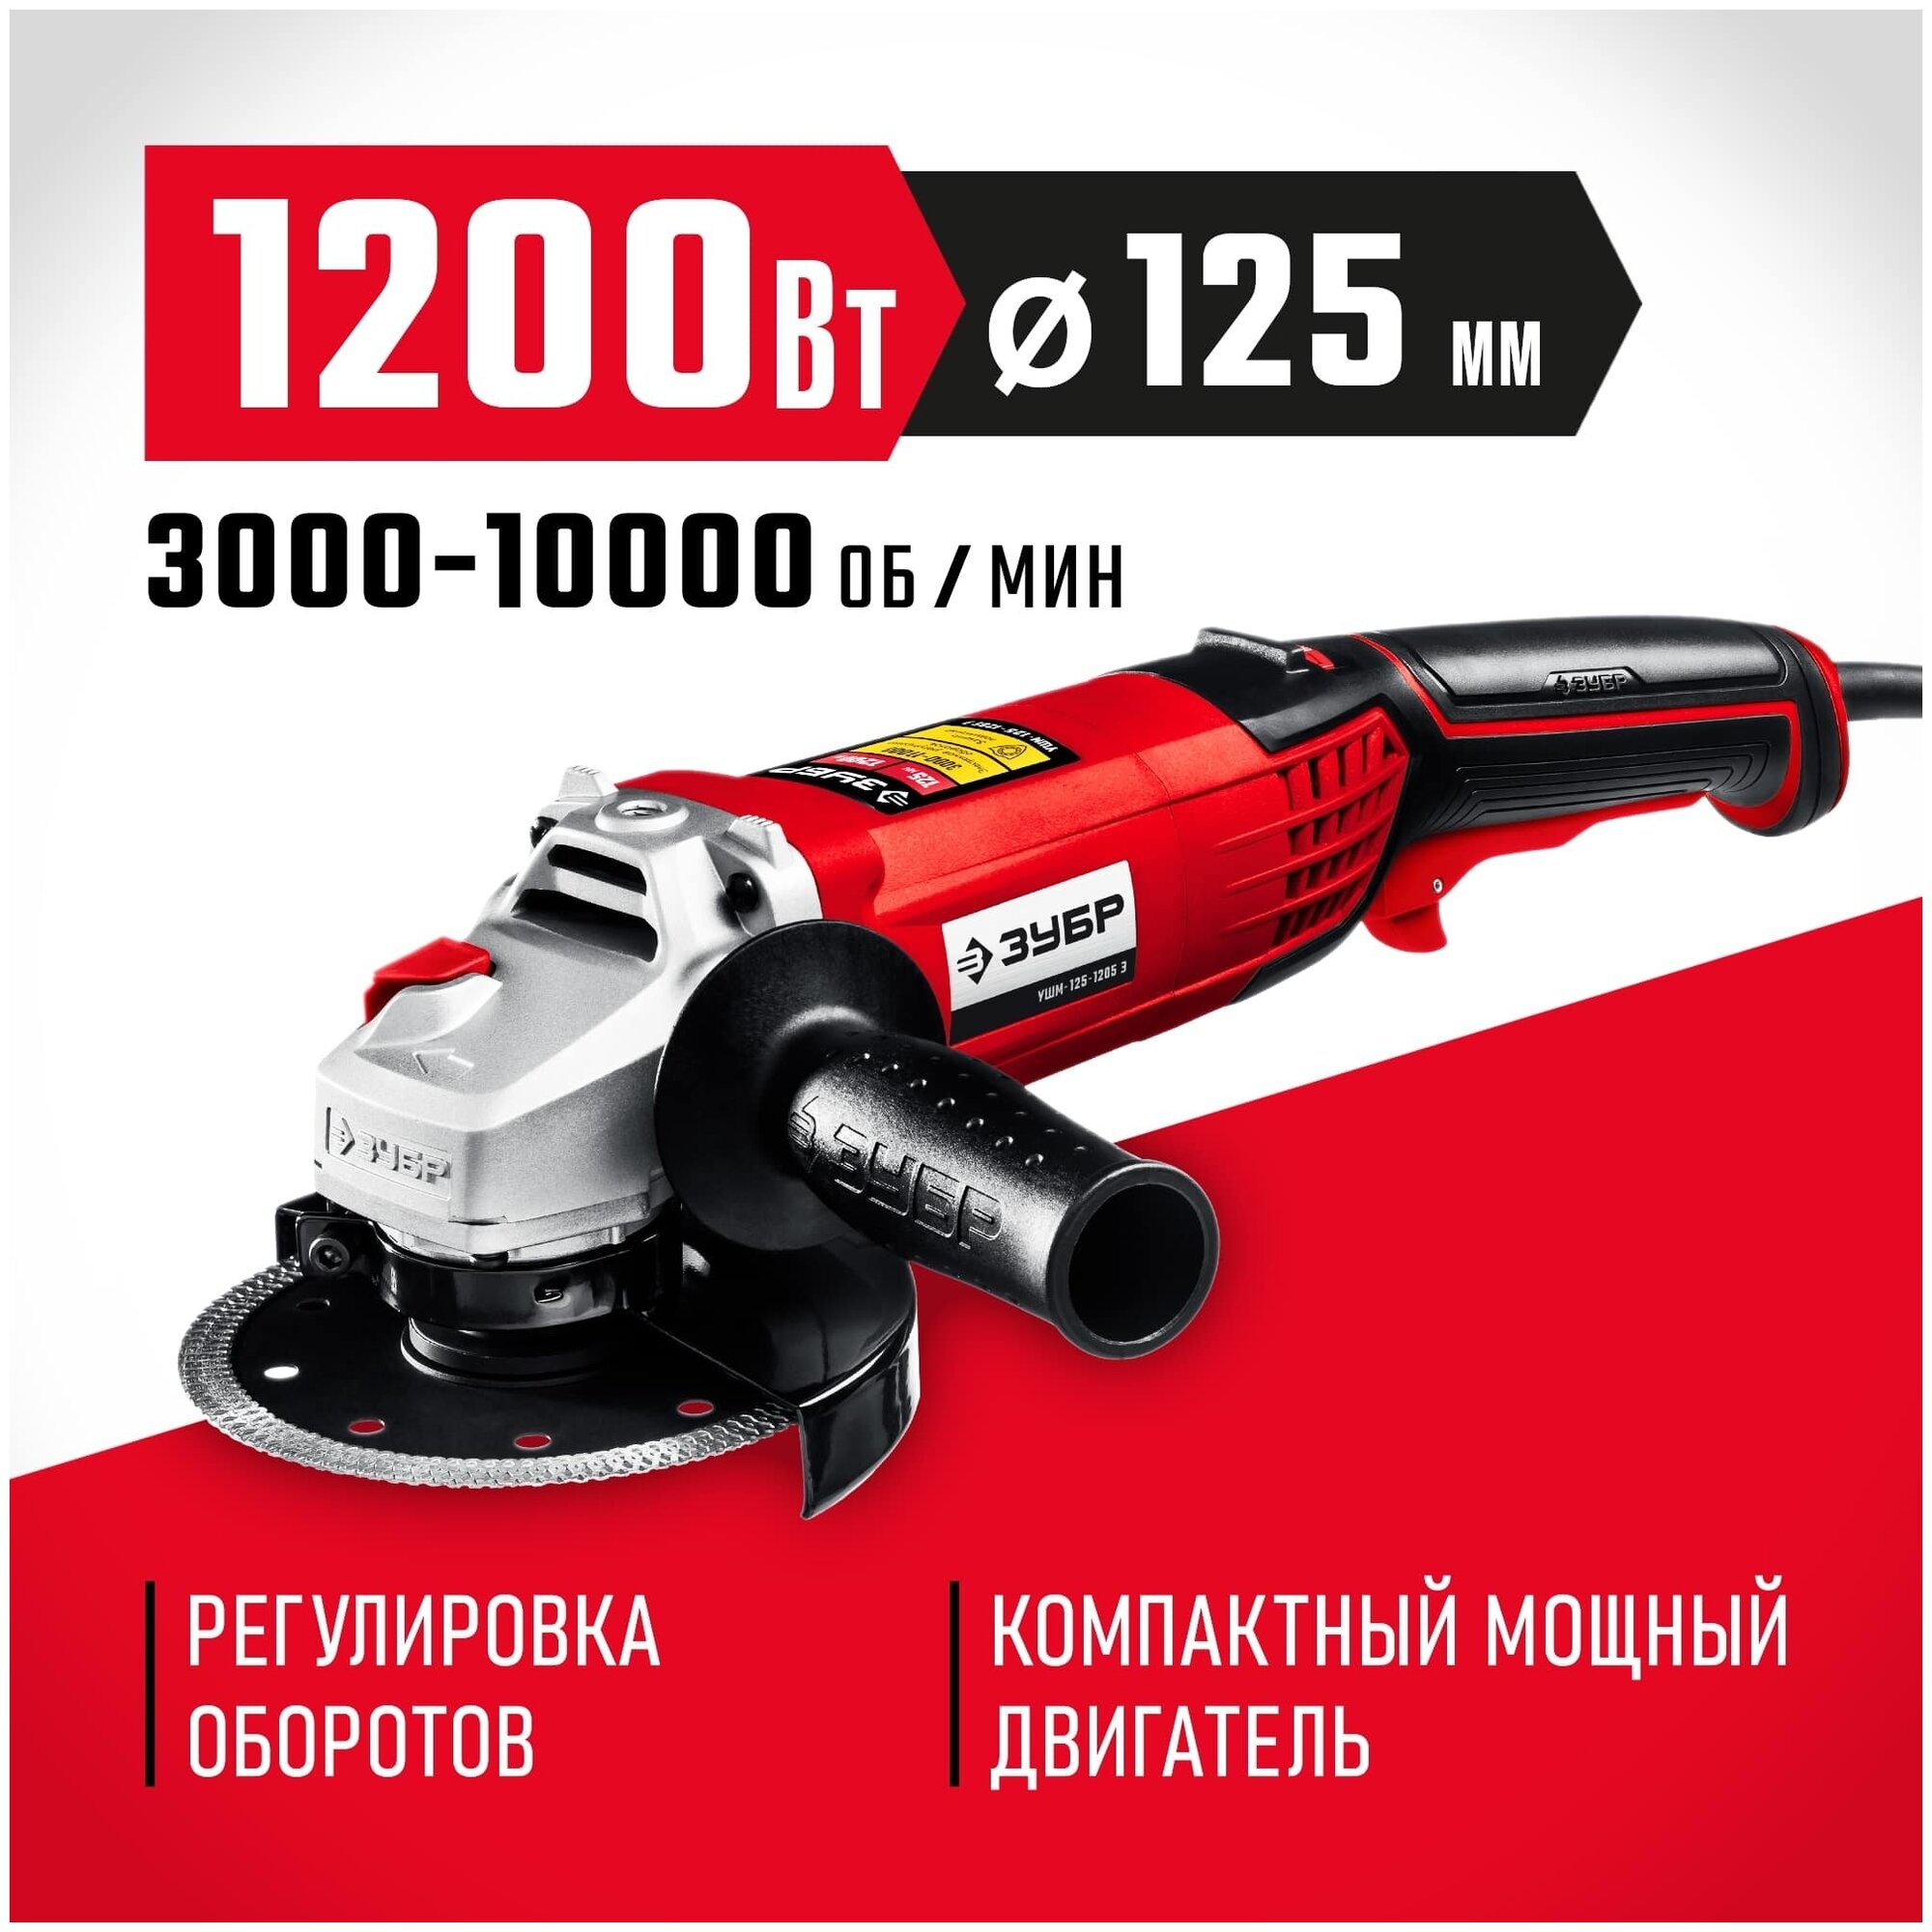 УШМ ЗУБР УШМ-125-1205 Э 1200 Вт 125 мм